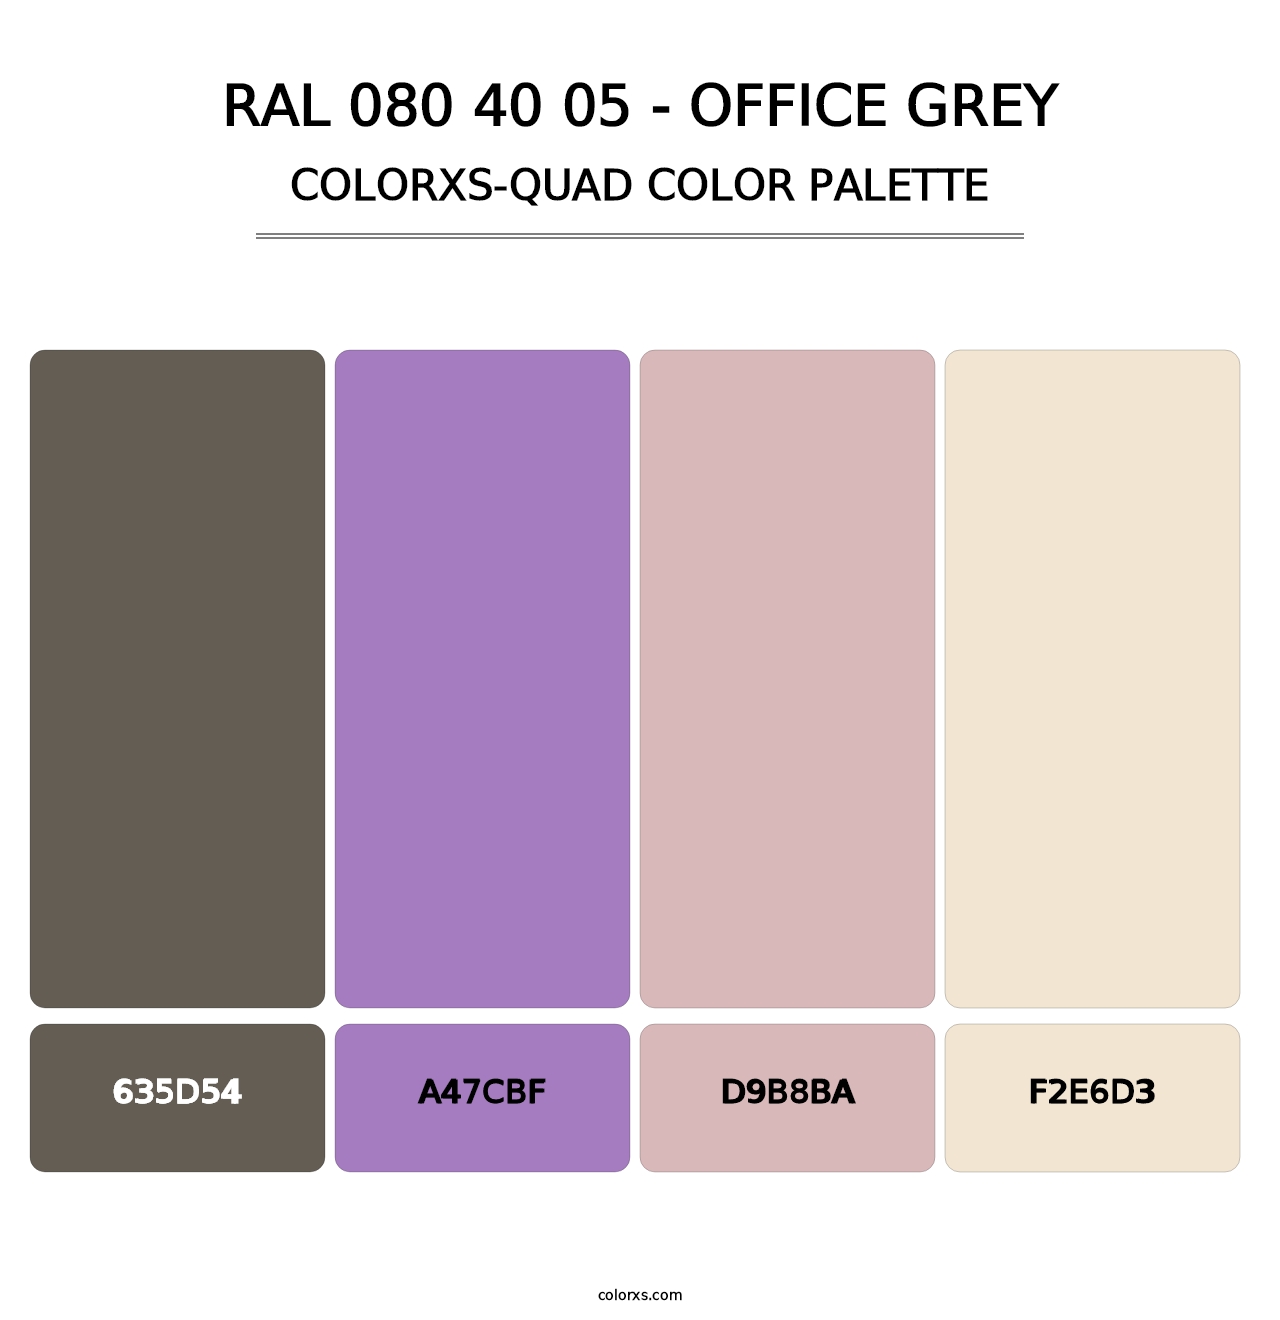 RAL 080 40 05 - Office Grey - Colorxs Quad Palette